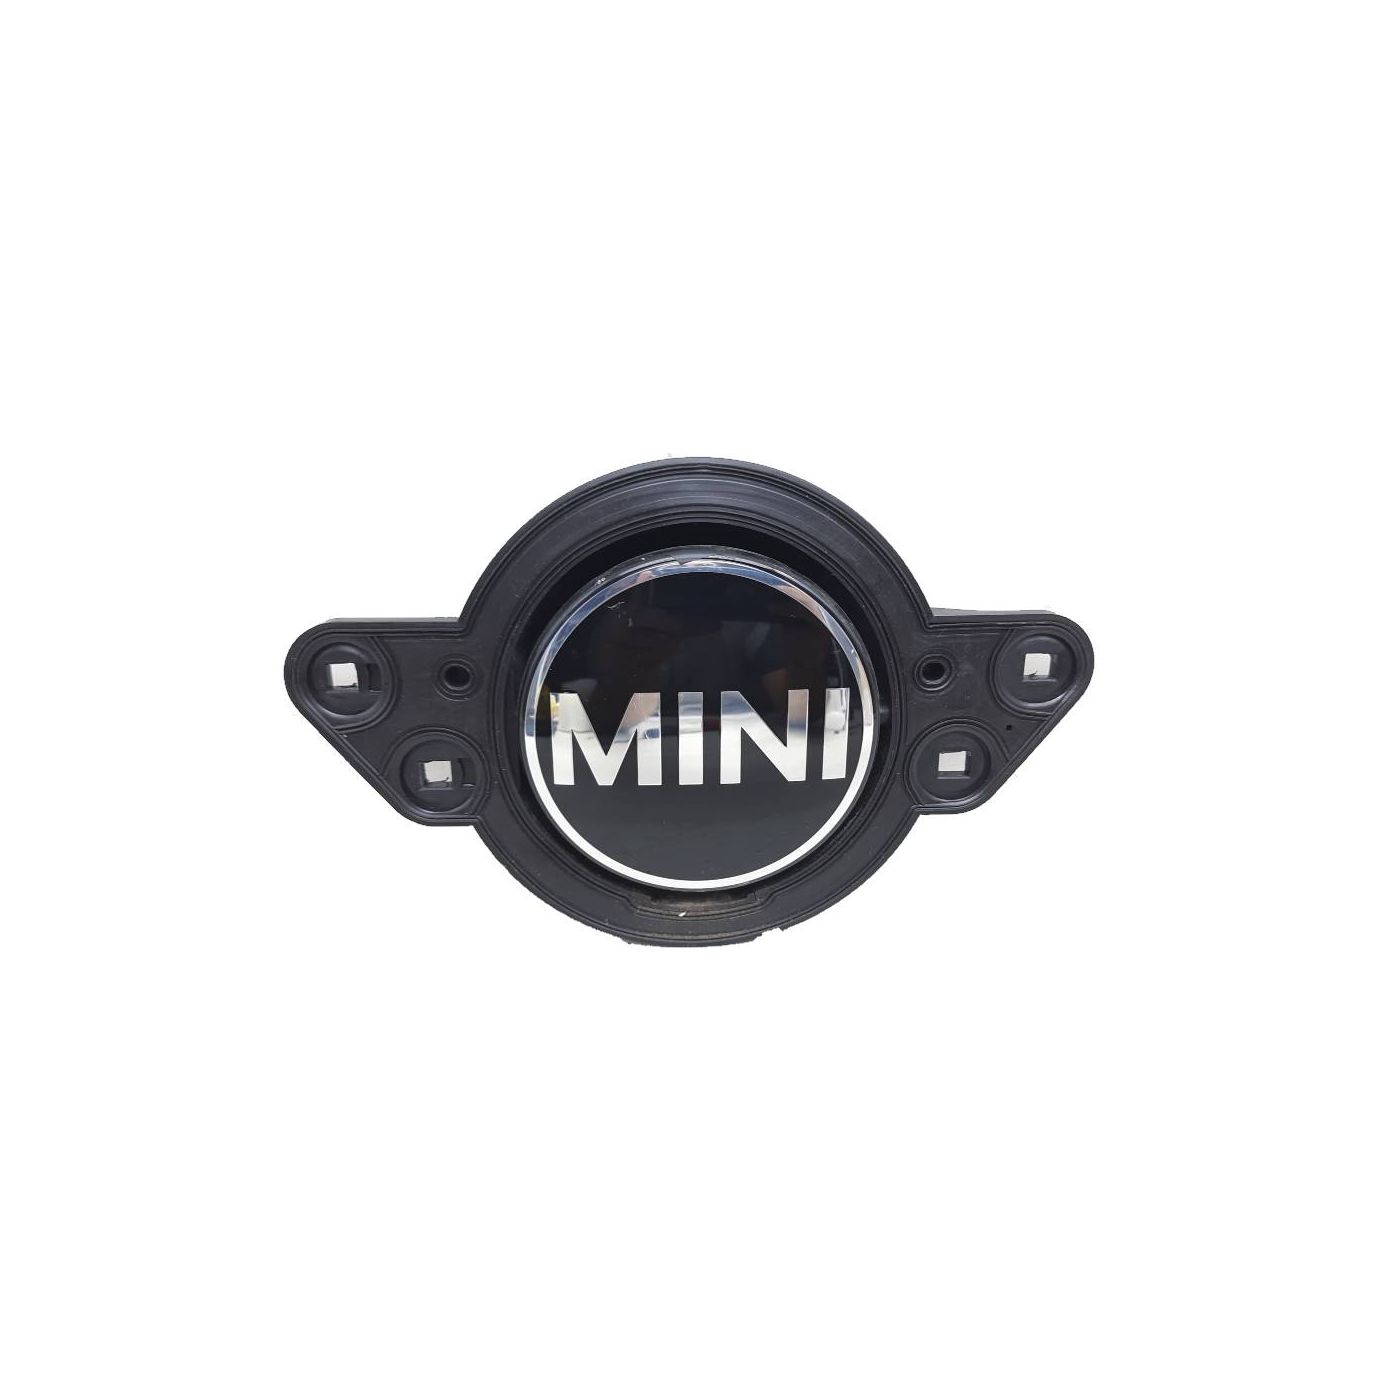 Hinterer Türgriff für MINI Mini Countryman R60 9802314